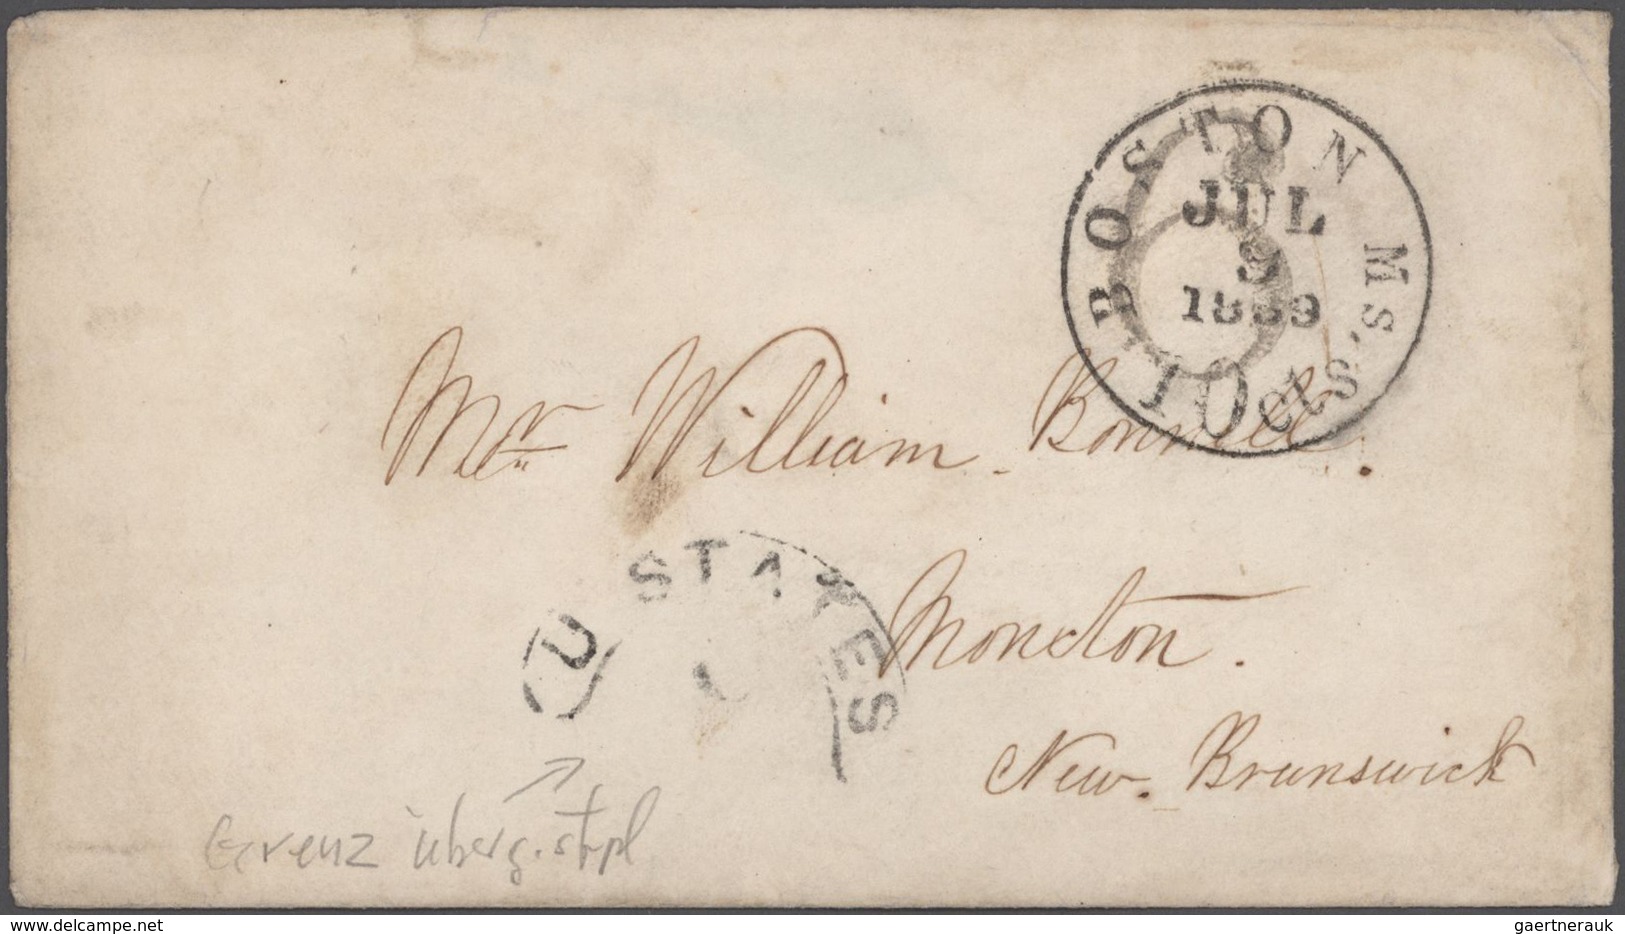 Vereinigte Staaten Von Amerika: 1834/1900 Album With Ca. 70 Covers (many Prefilatelic Letters) And U - Briefe U. Dokumente